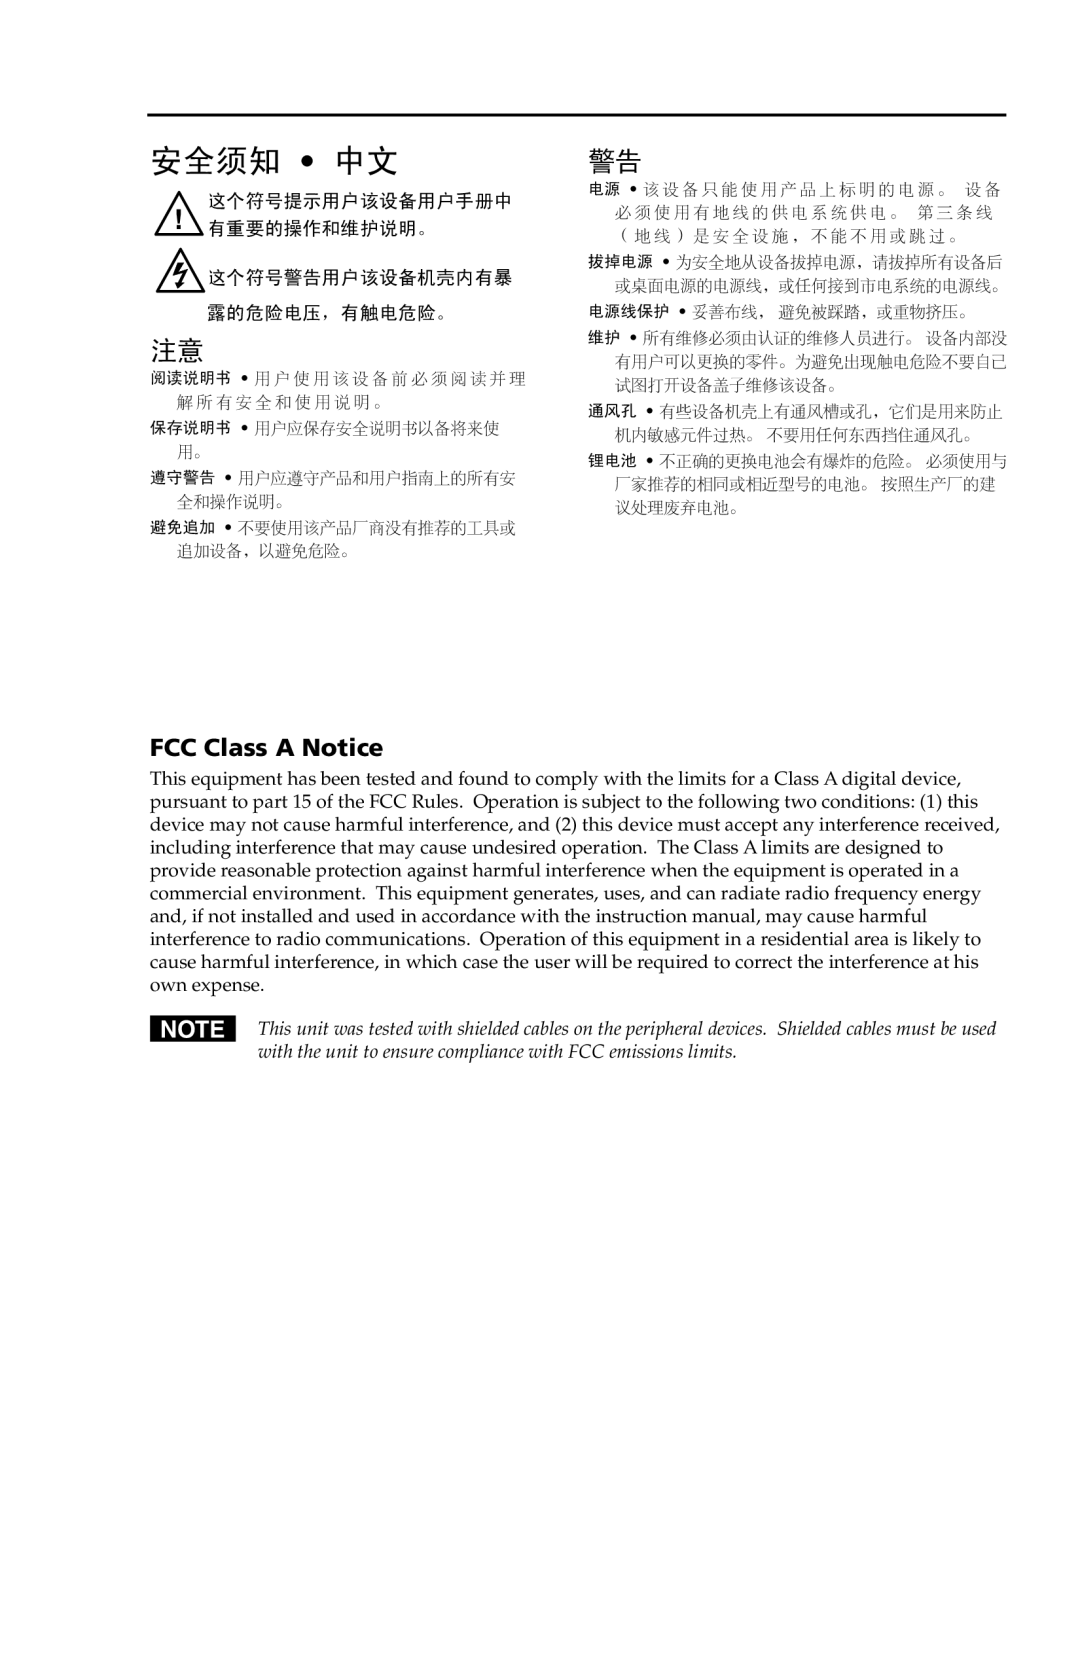 Extron electronic 68-1034-02 Rev. A user manual FCC Class A Notice, 安全须知 中文 